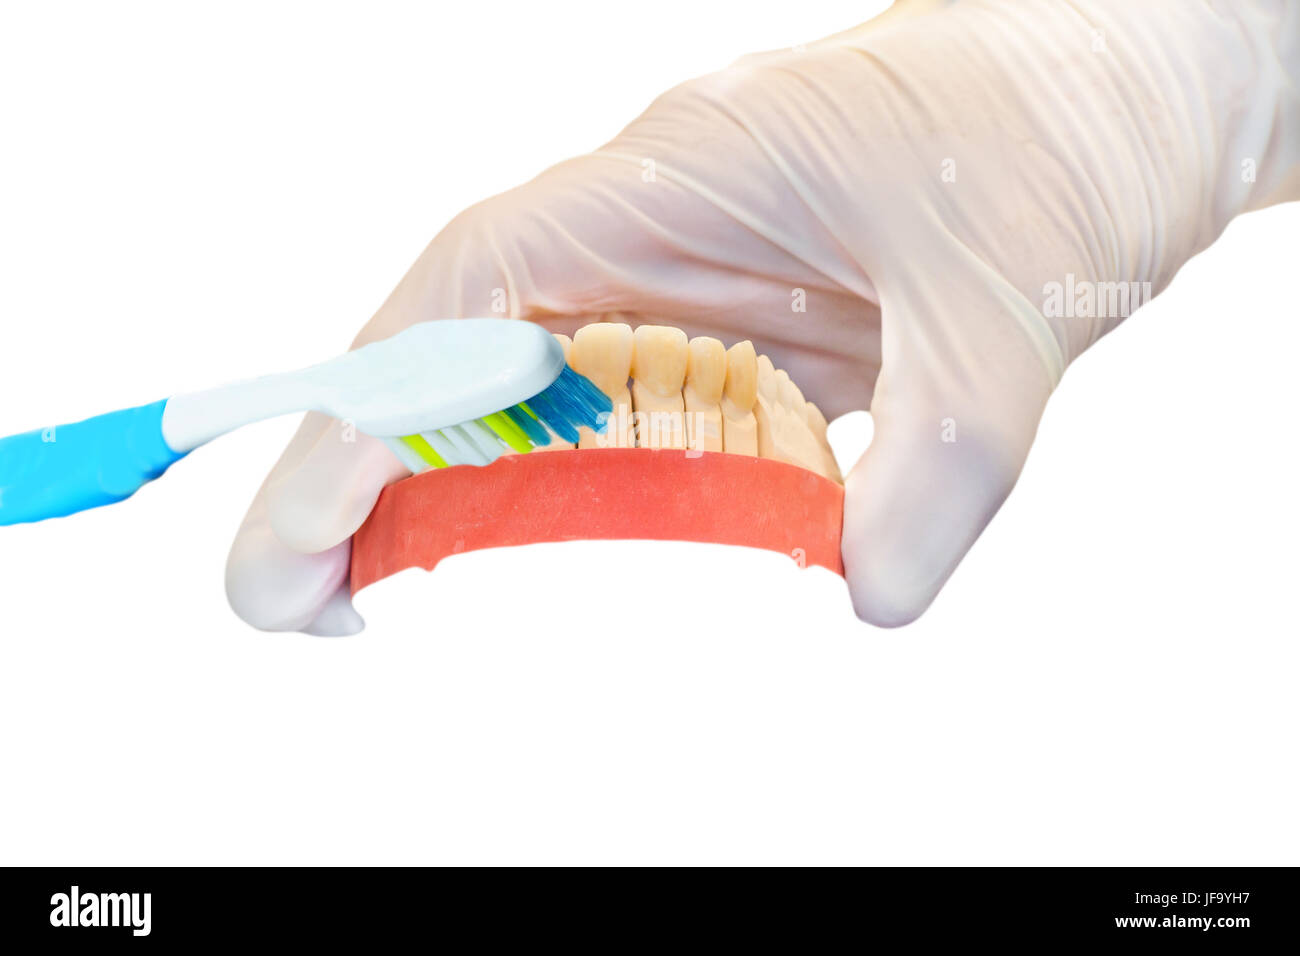 Prótesis dentales, prótesis y cepillo de dientes Foto de stock